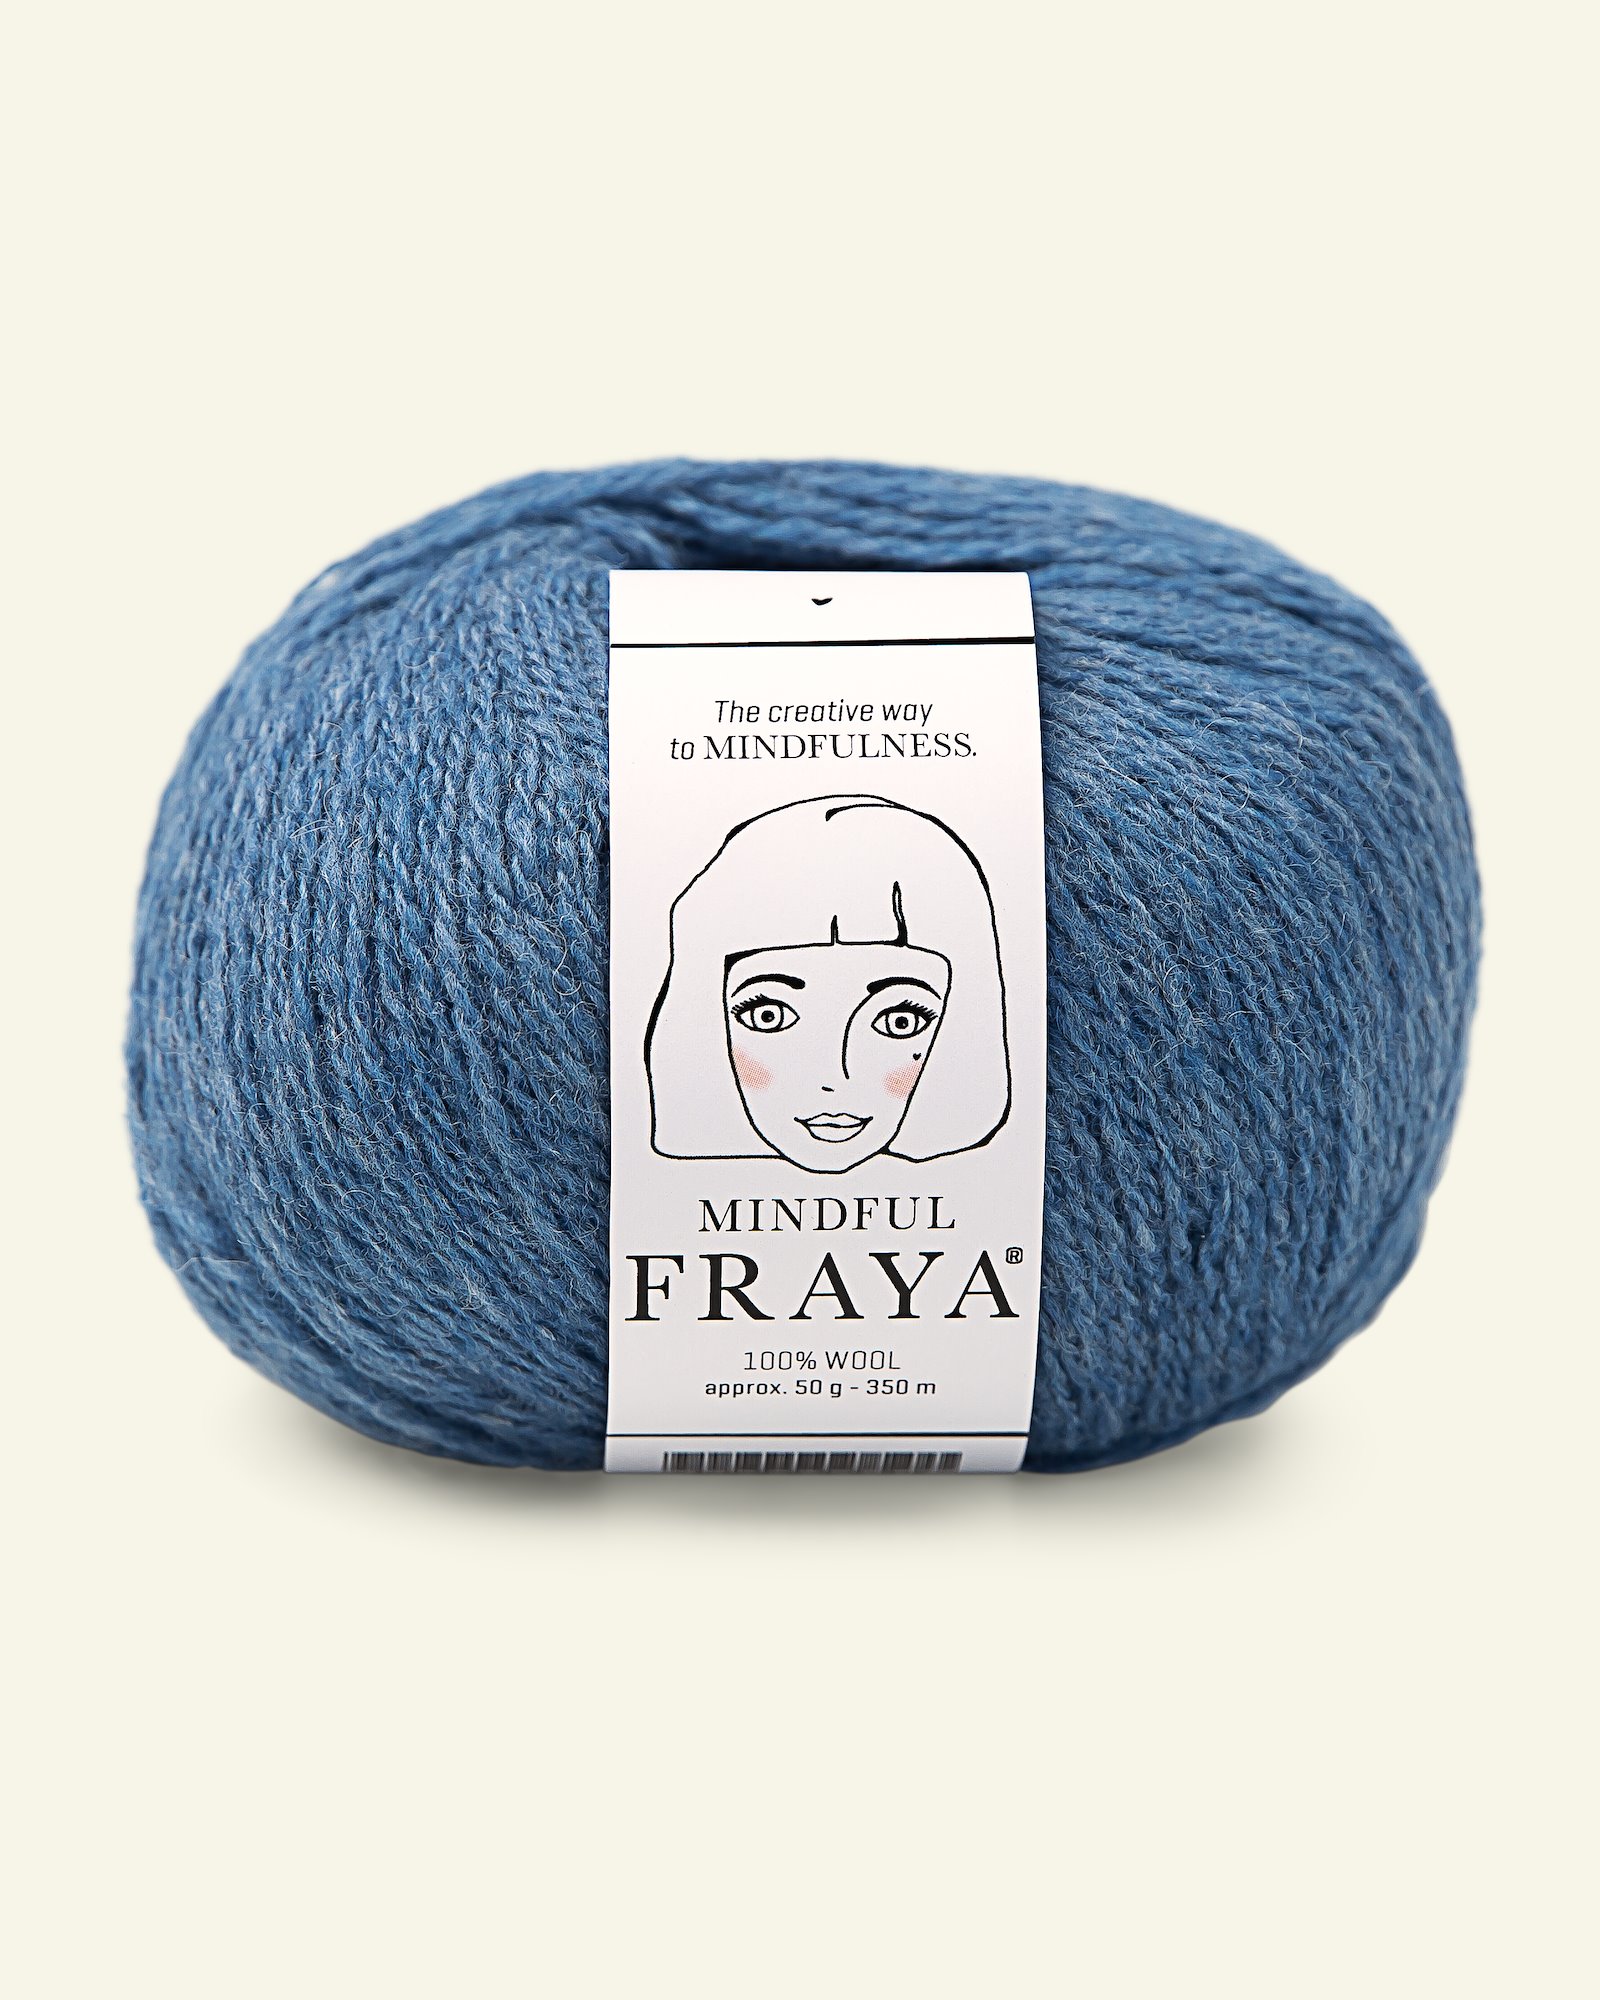 FRAYA, 100% wool yarn "Mindful", blue melange 90053320_pack